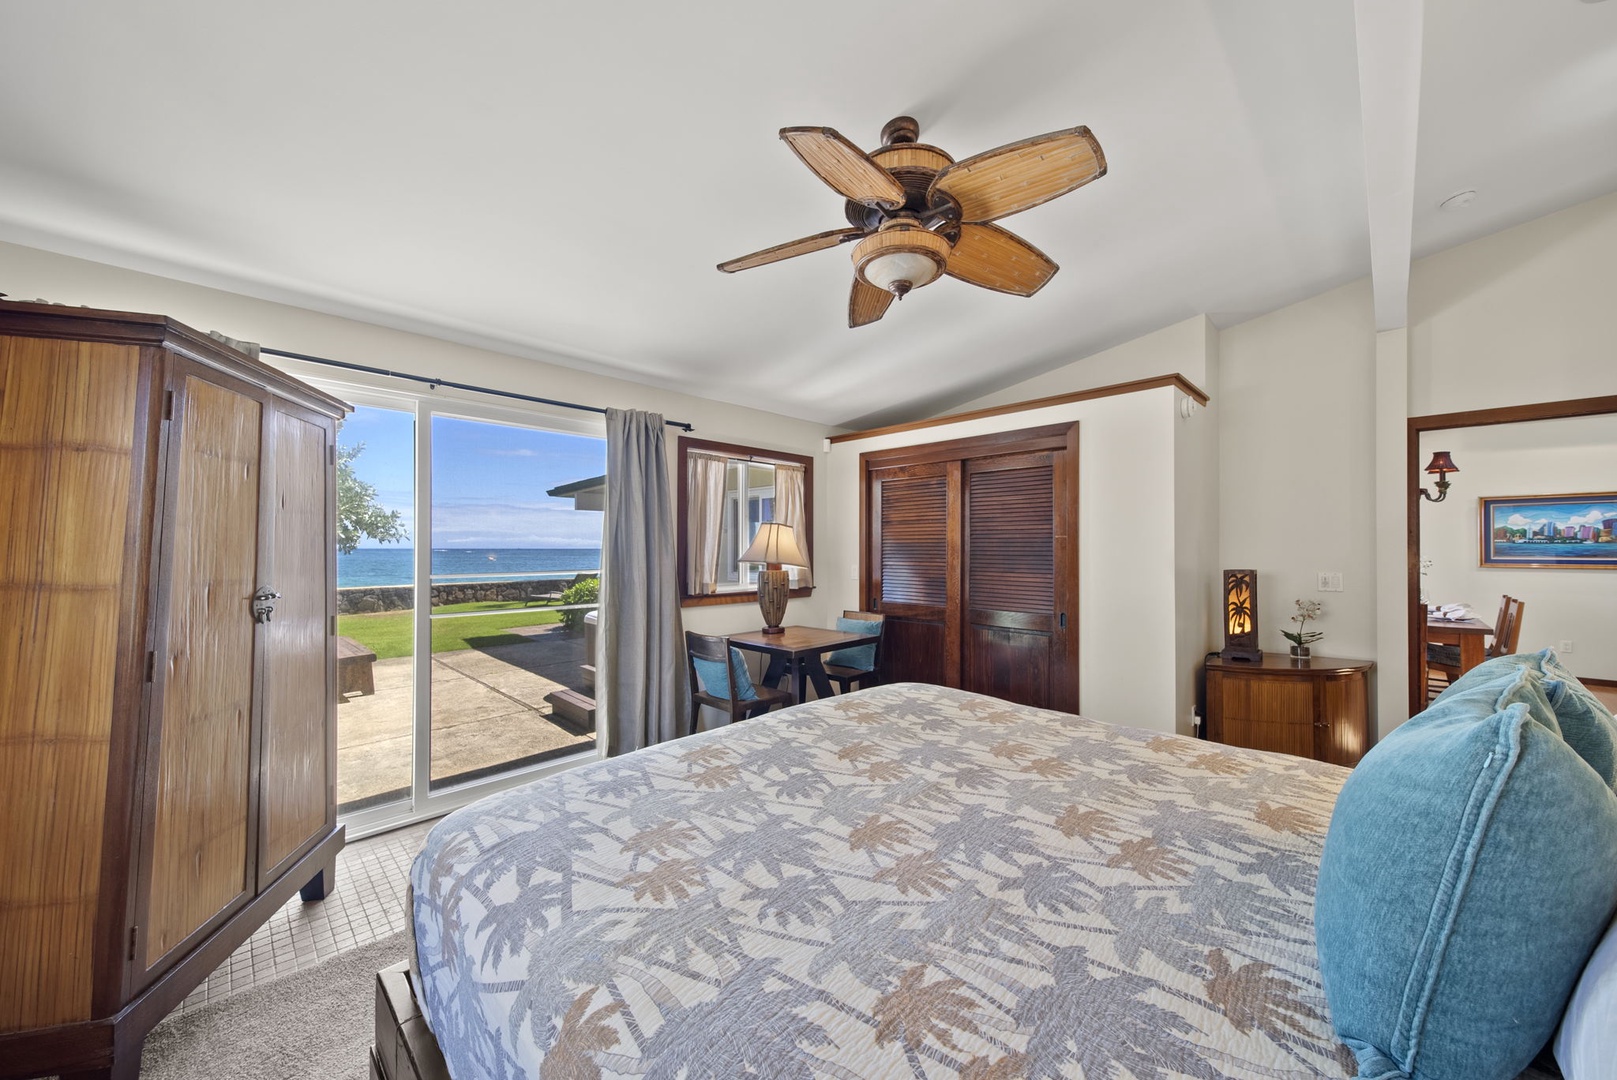 Waialua Vacation Rentals, Hale Oka Nunu - Ocean views from the comfort of your bed